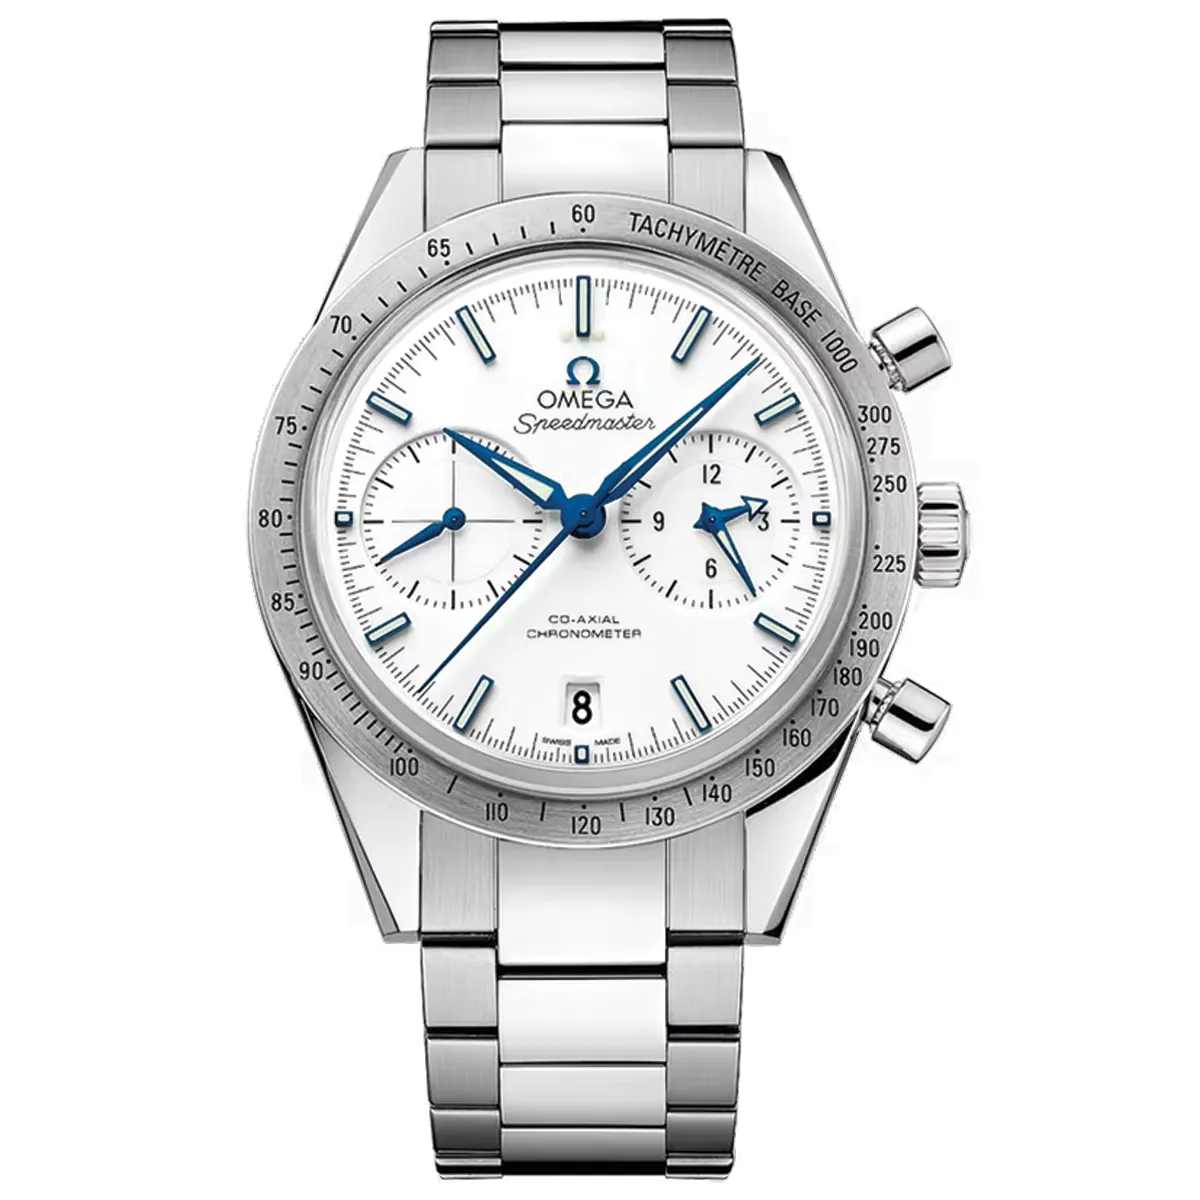 Đồng hồ Omega Speedmaster ’57 Titanium on titanium 331.90.42.51.04.001 mặt số màu trắng. Dây đeo bằng titanium. Thân vỏ bằng titanium.